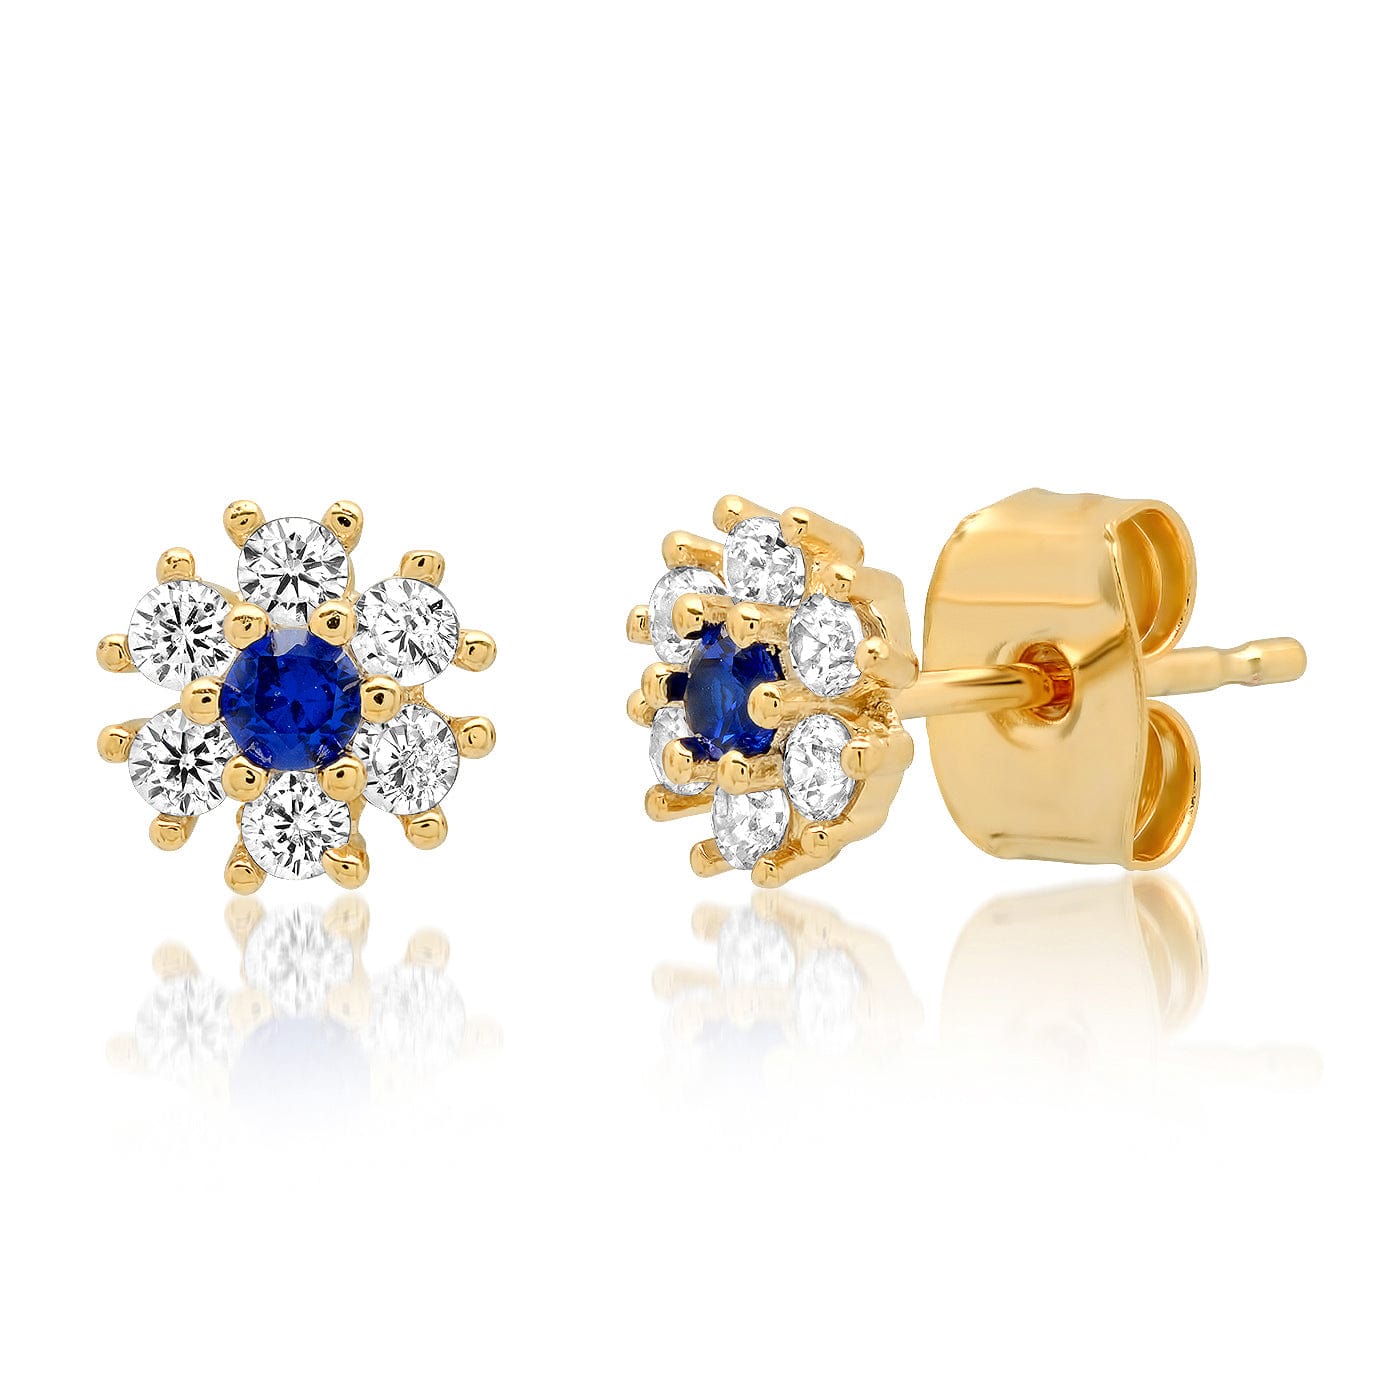 TAI JEWELRY Earrings Sapphire CZ Flower Stud With Jewel Tone Center Stone